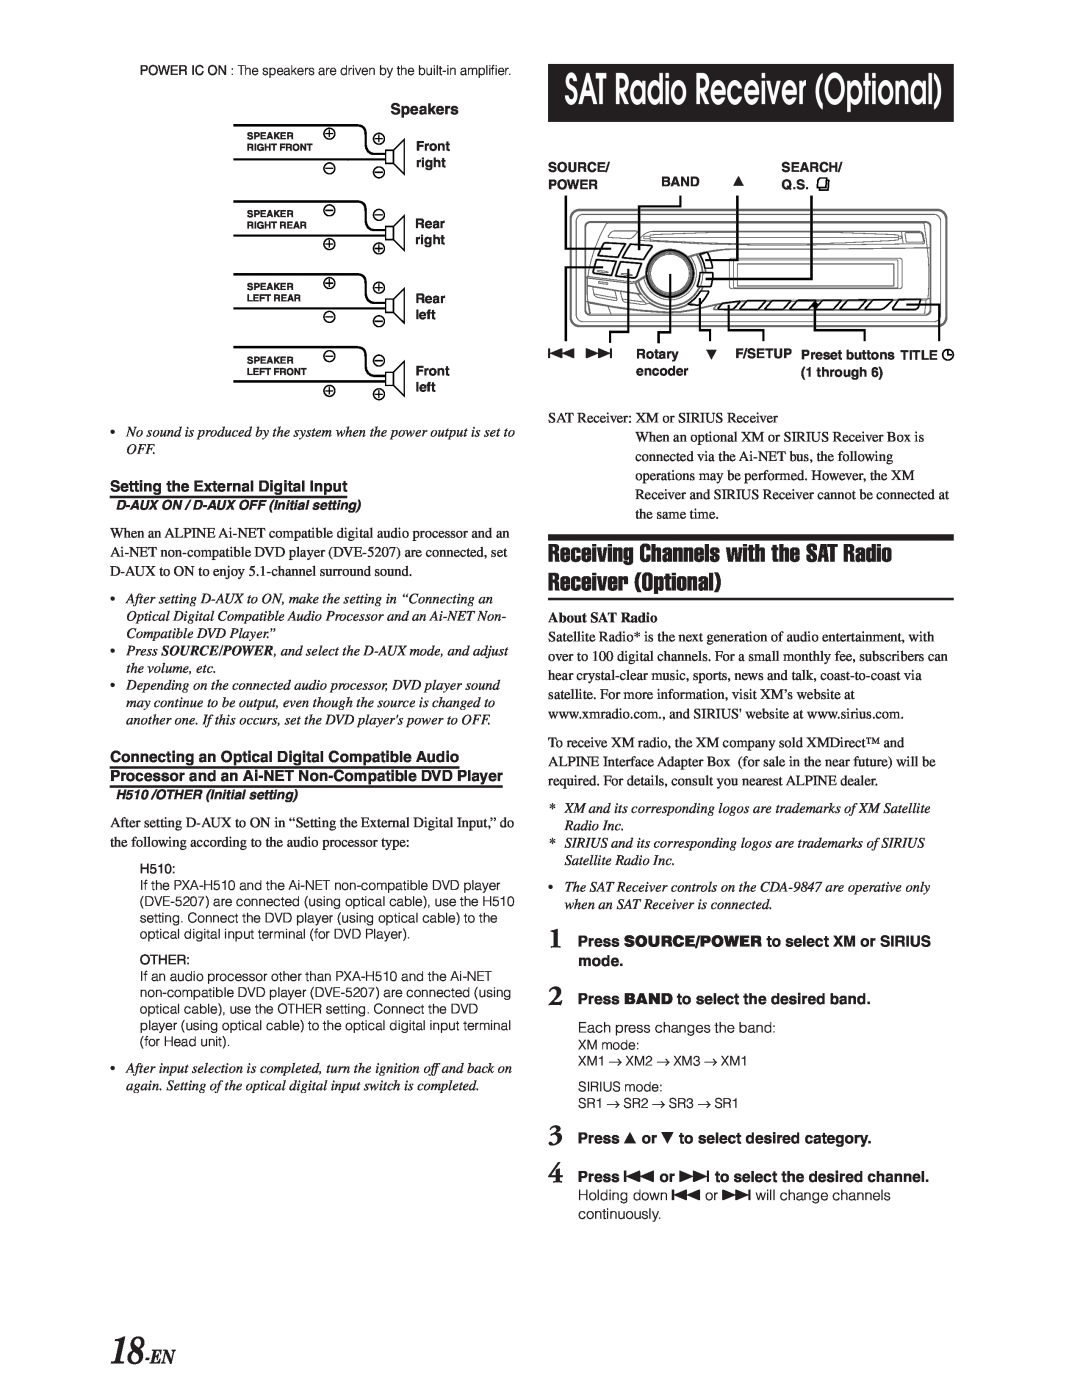 Alpine CDA-9847 owner manual 18-EN, SAT Radio Receiver Optional, About SAT Radio 